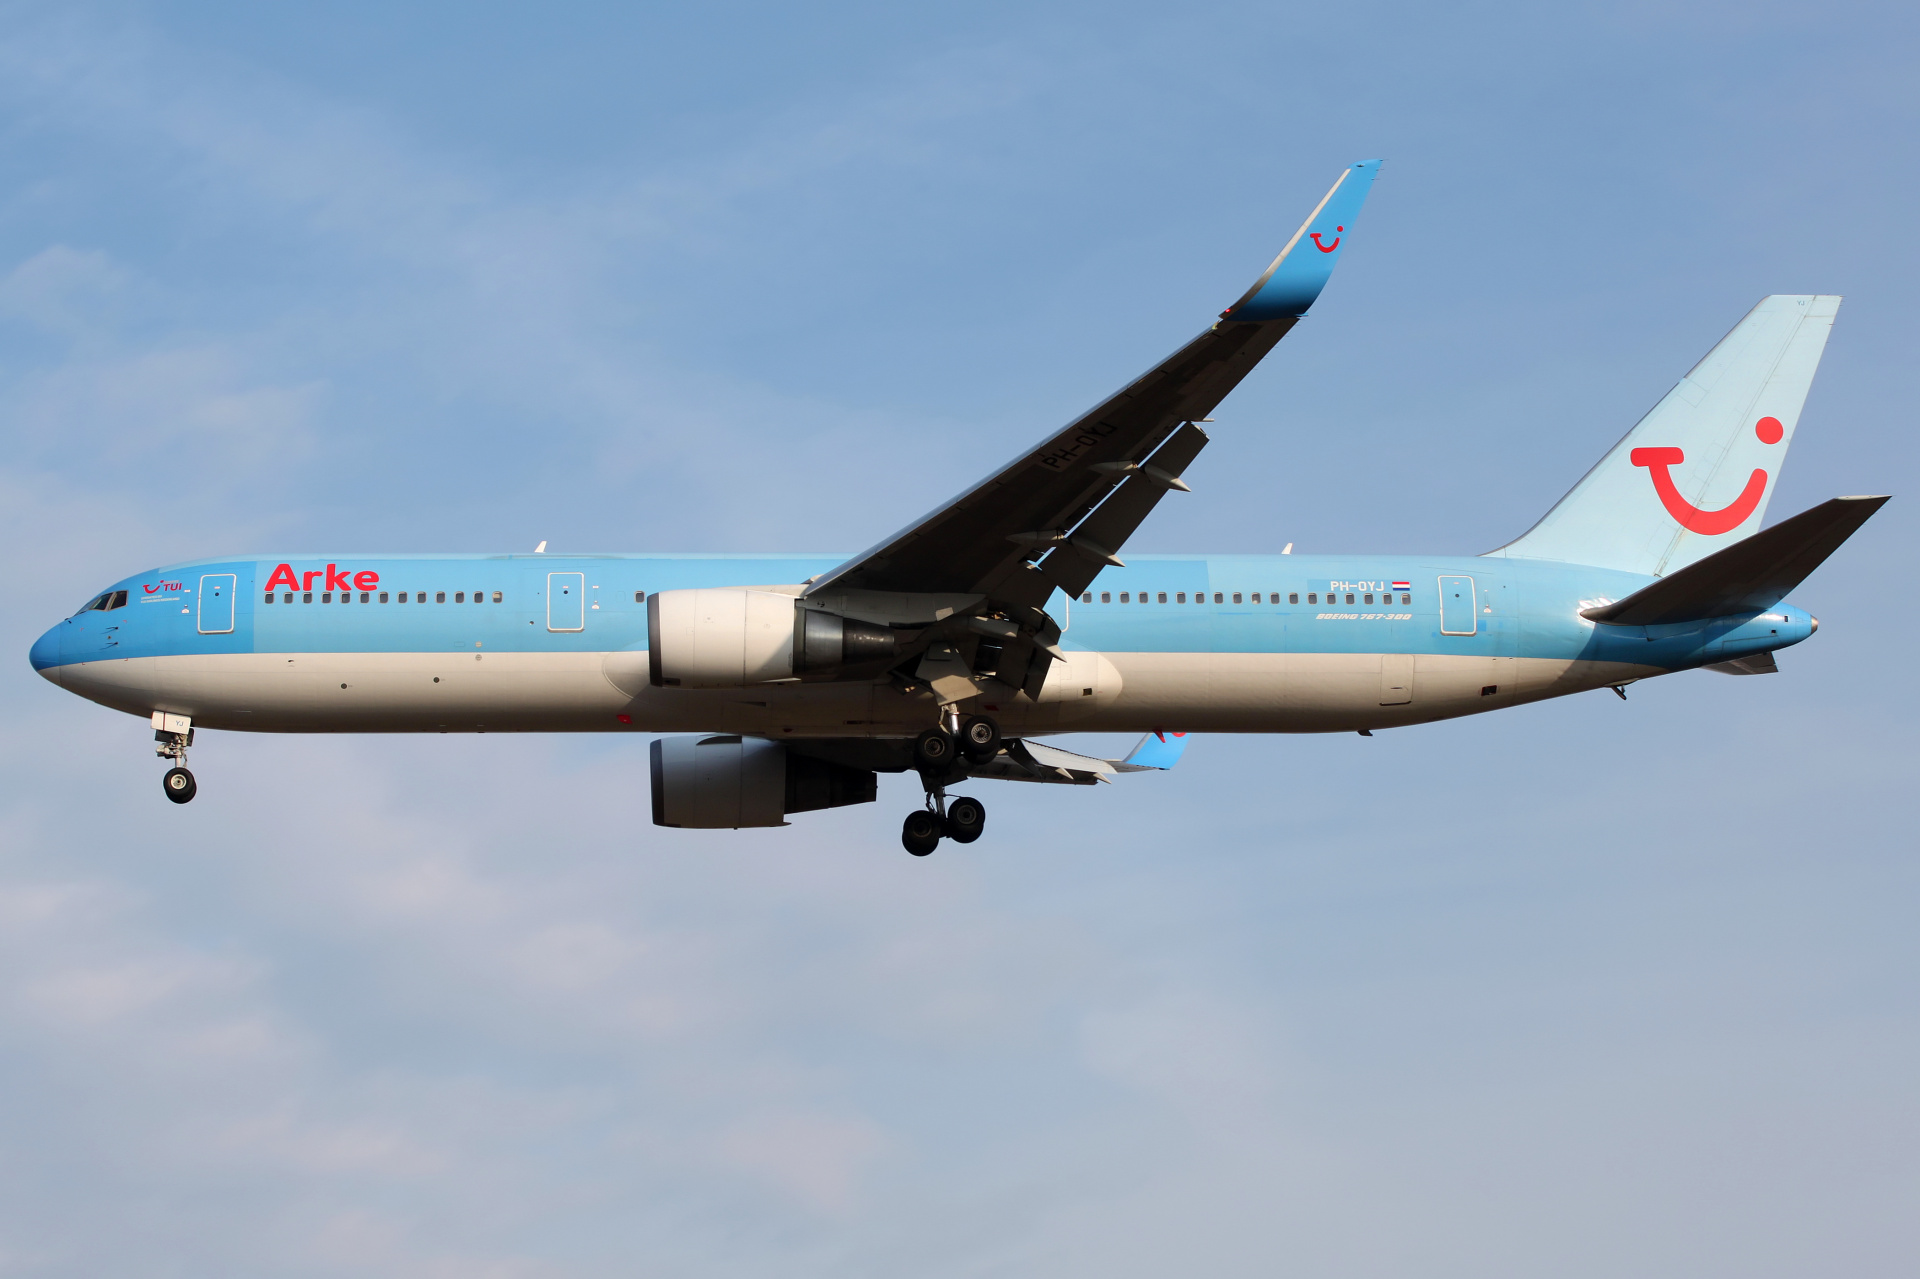 PH-OYJ, Arke (Aircraft » EPWA Spotting » Boeing 767-300)